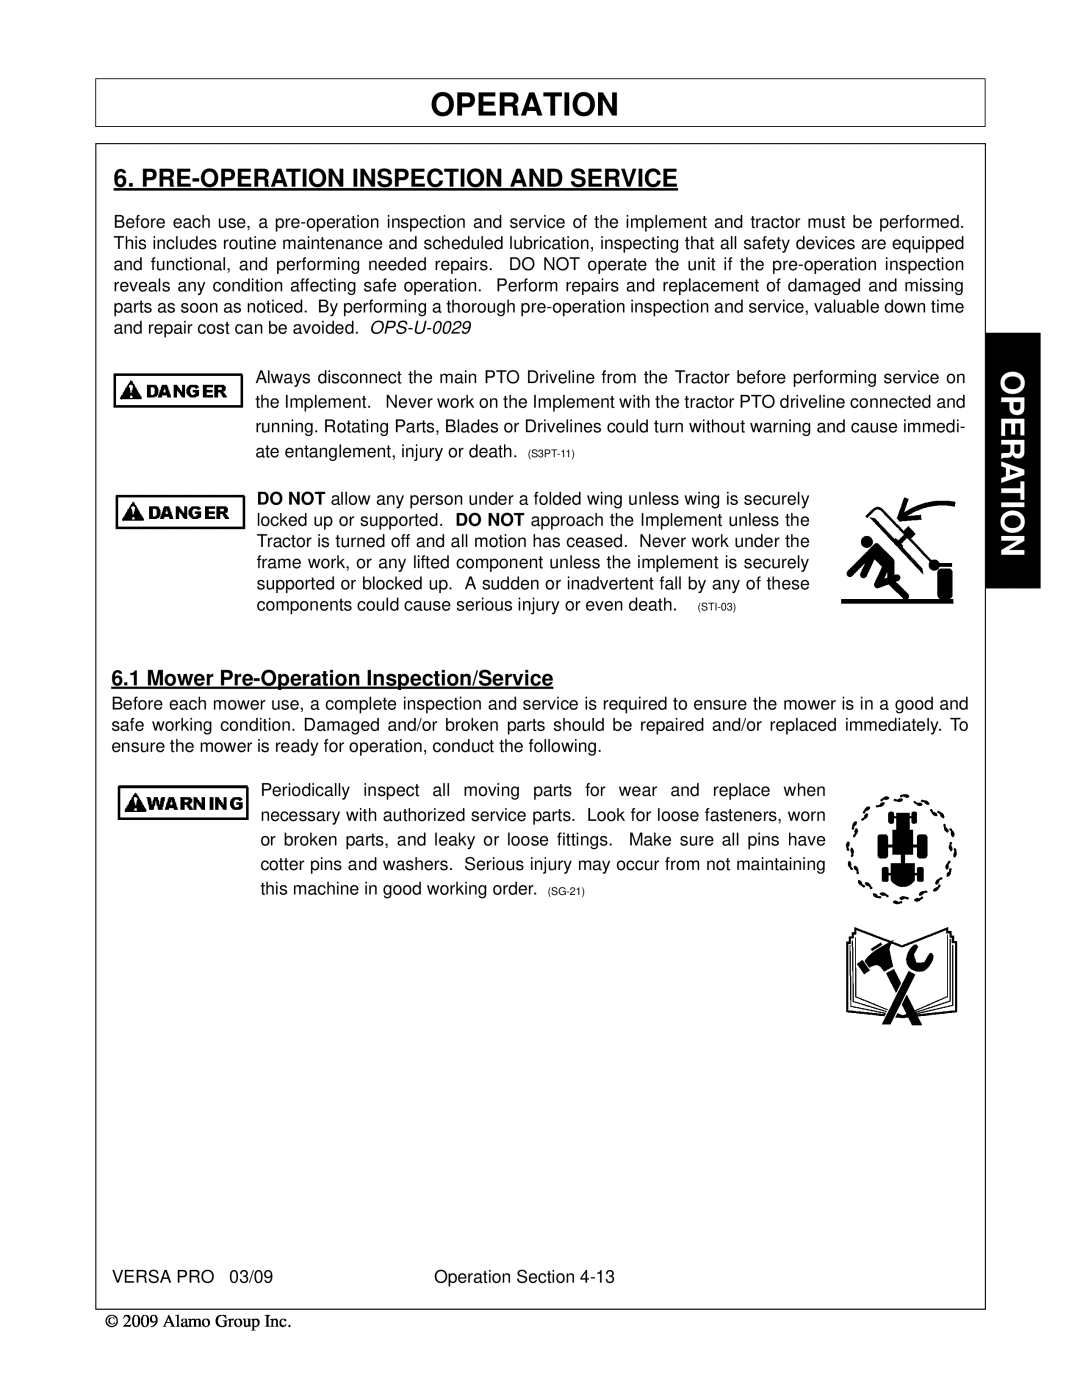 Alamo 803350C manual Pre-Operationinspection And Service, Mower Pre-OperationInspection/Service 